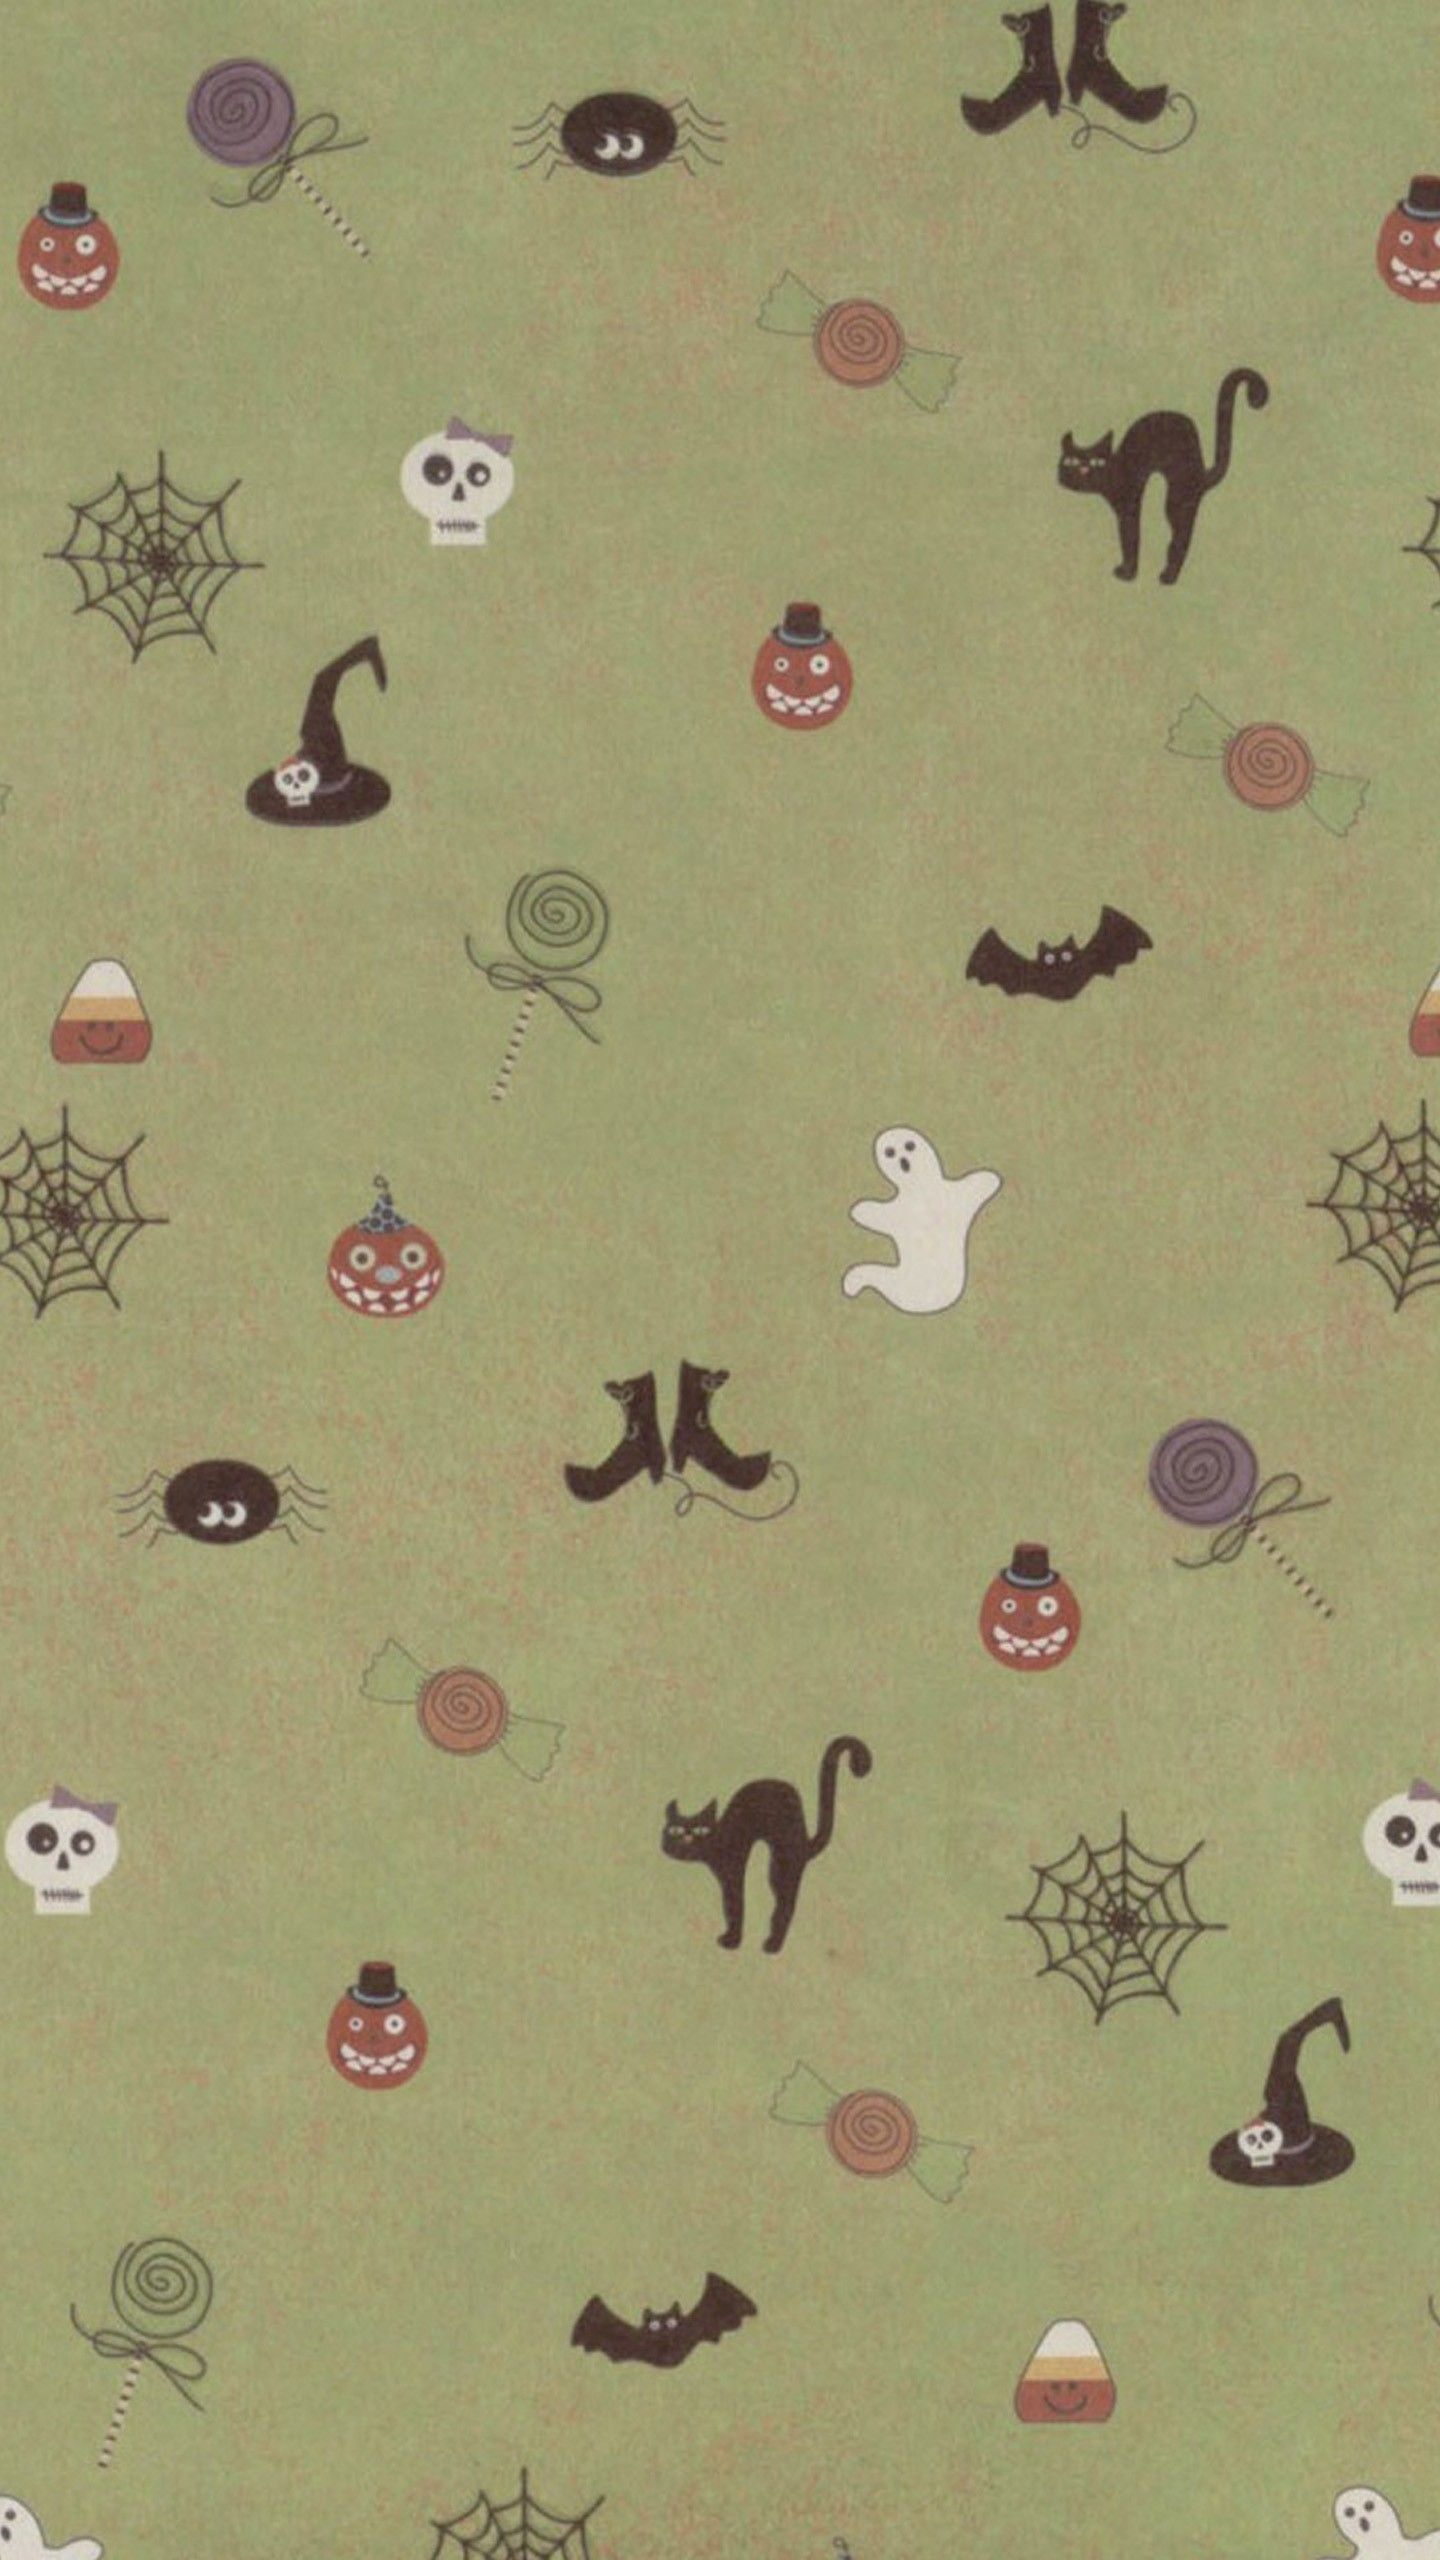 Halloween HD Wallpaper for LG G5